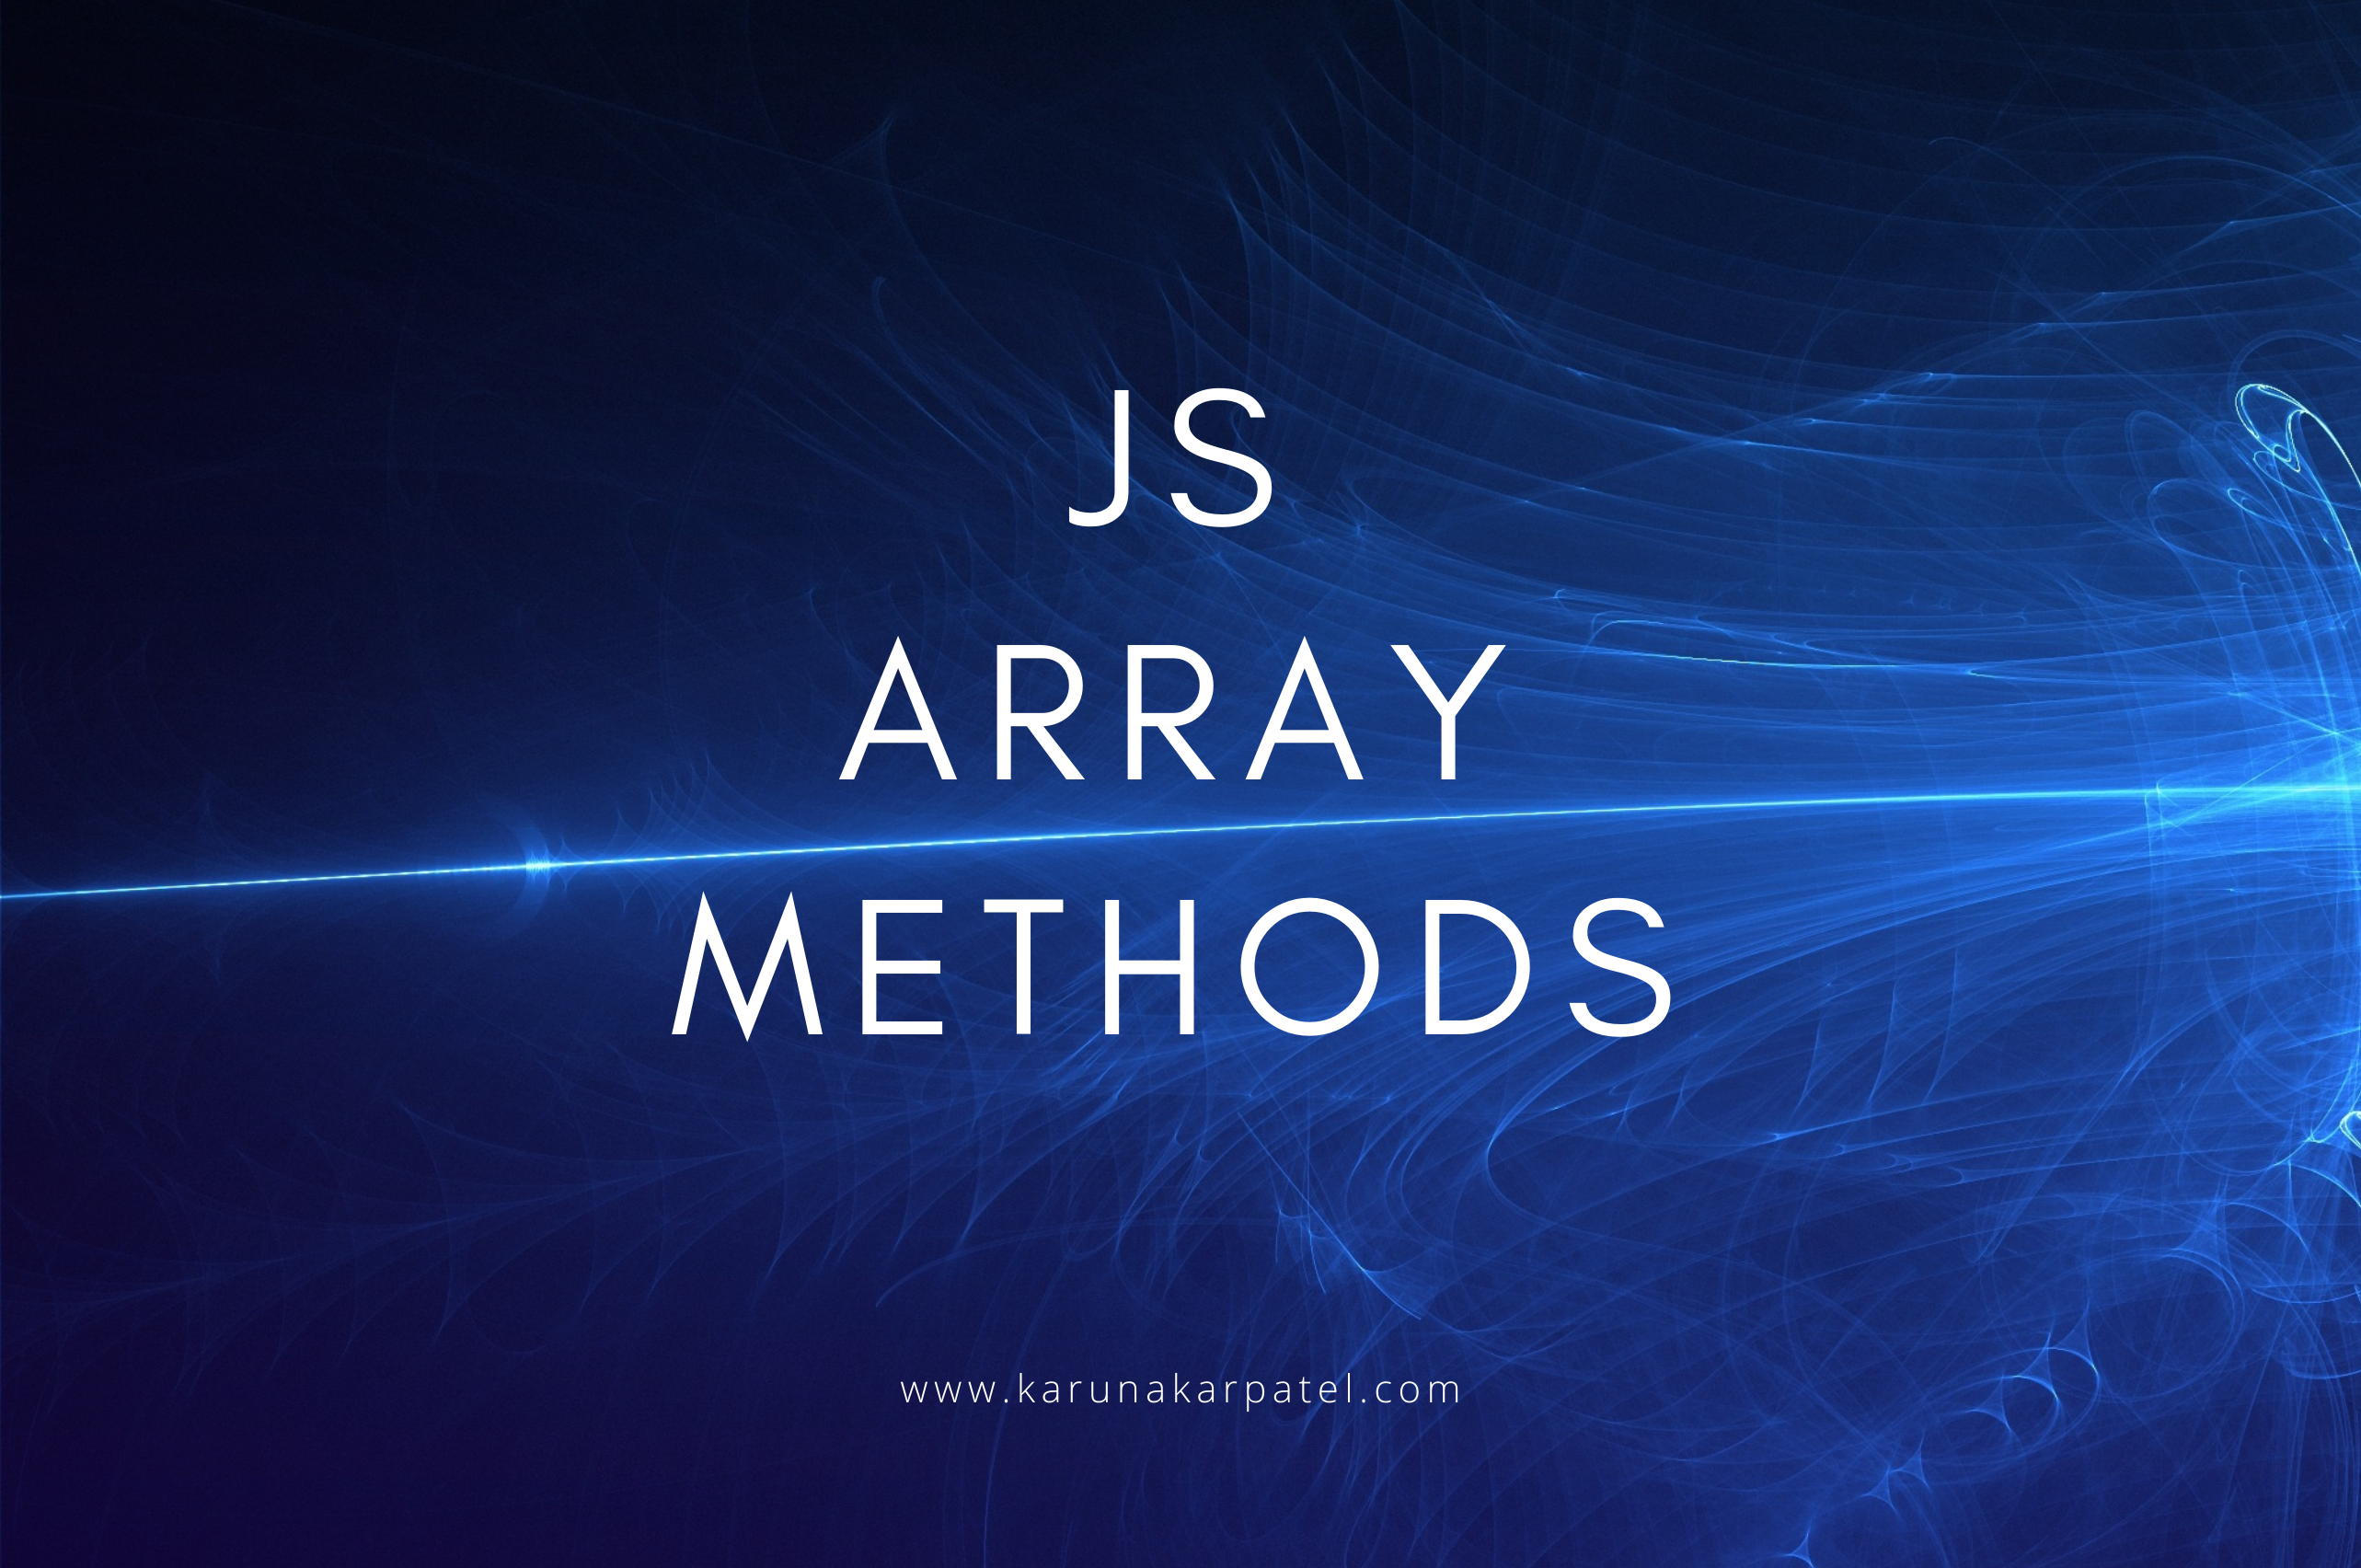 js-array-methods-image